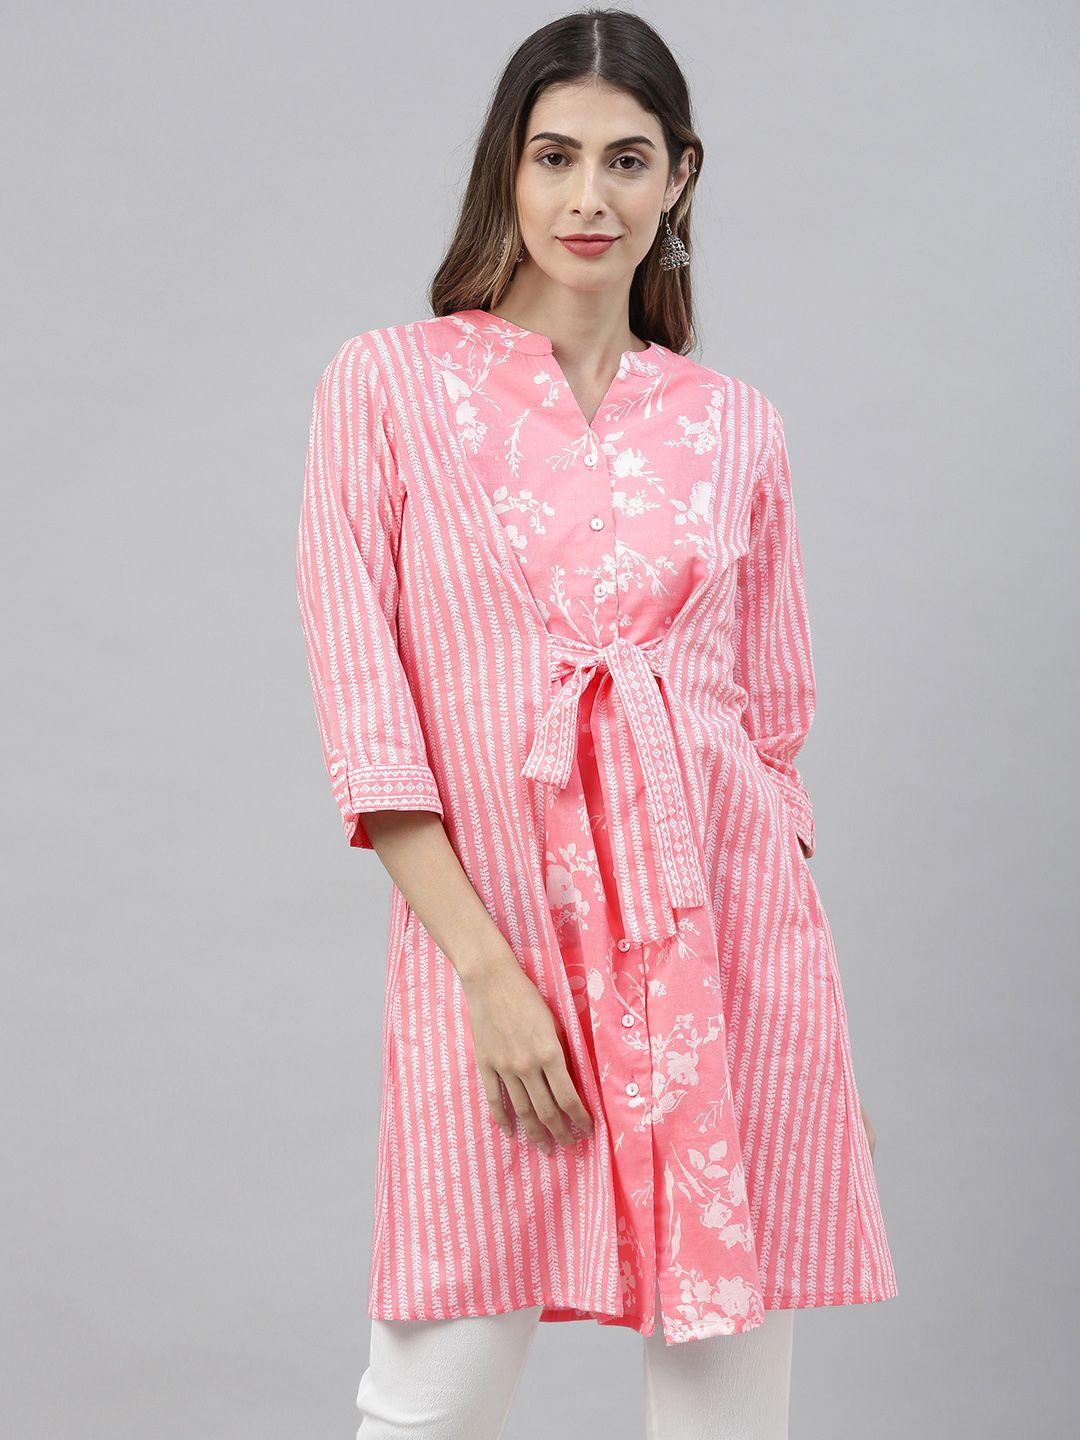 global-desi-women's-pink-&-white-striped-tunic